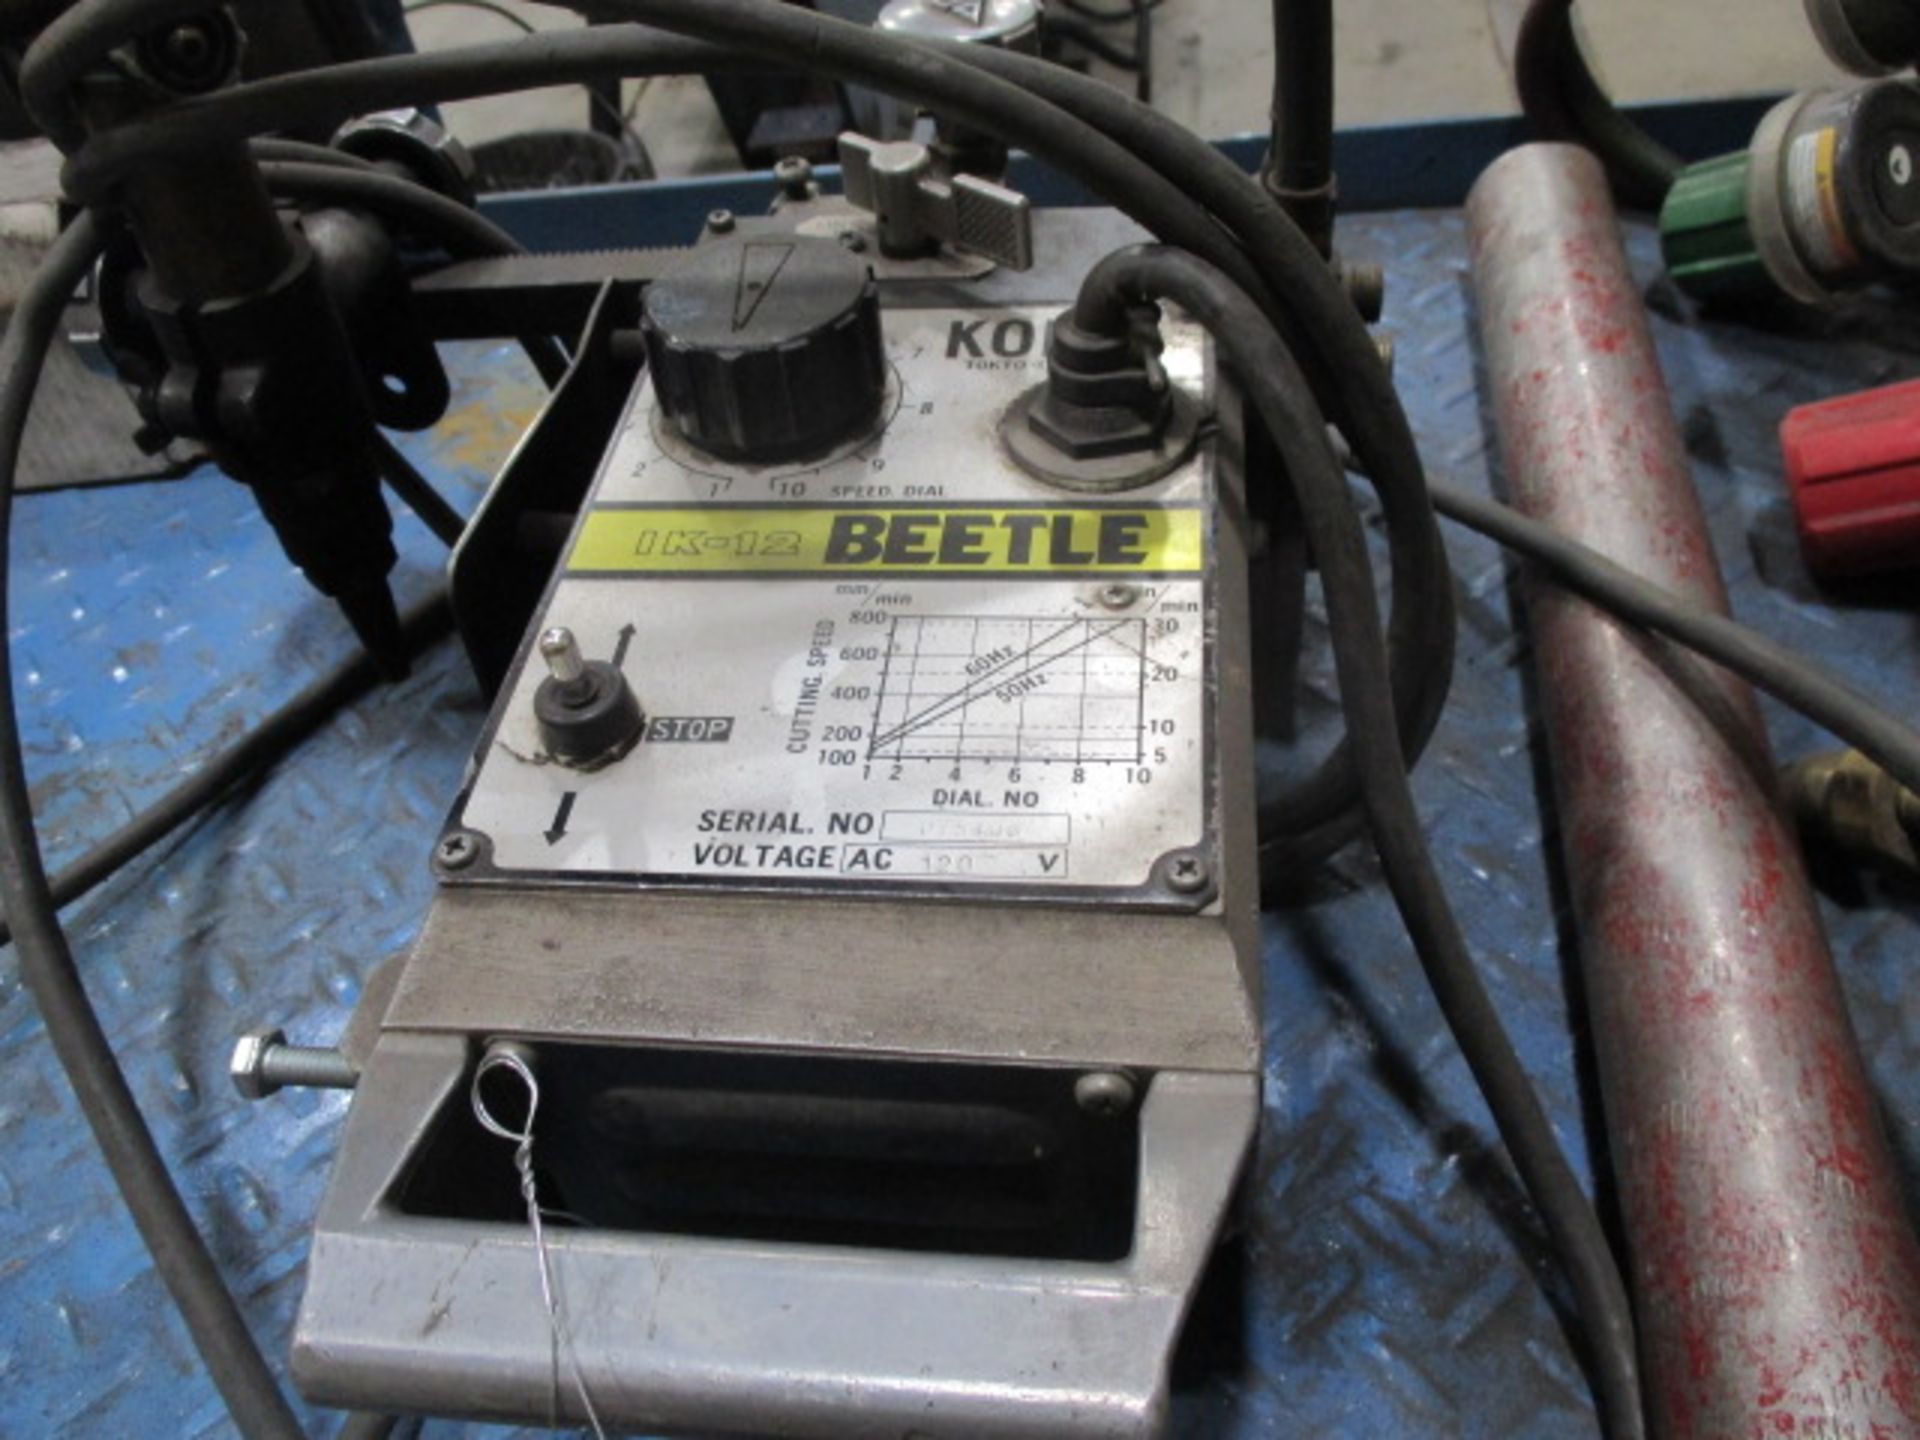 Koike IK-12 Beetle Portable Gas Cutting Machine and Base Plates